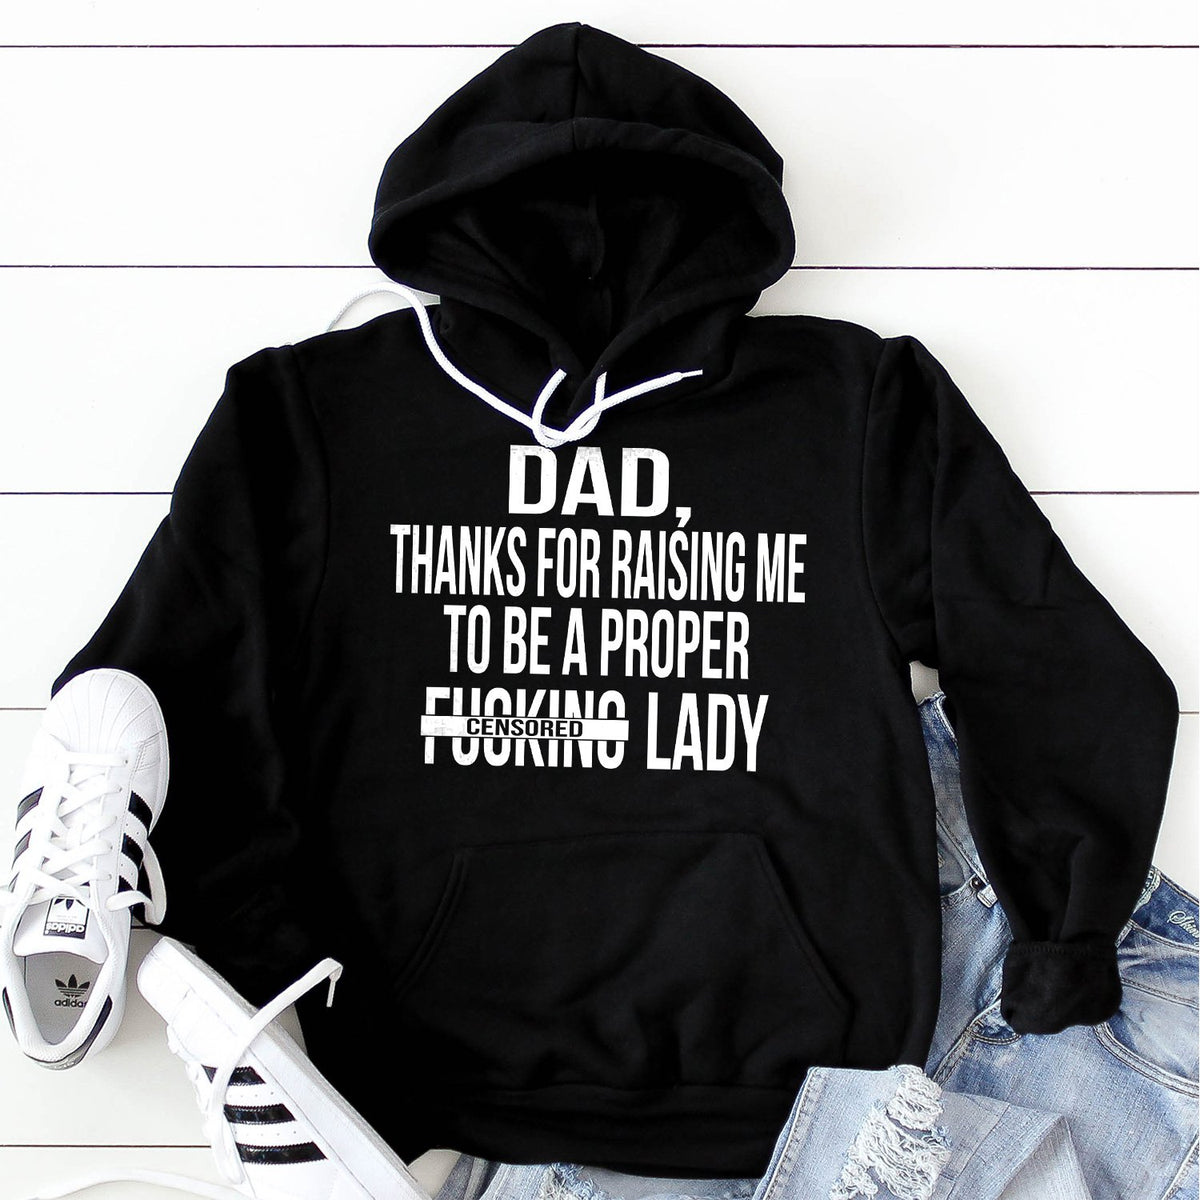 DAD Thanks For Raising Me To Be A Proper Fucking Lady - Hoodie Sweatshirt